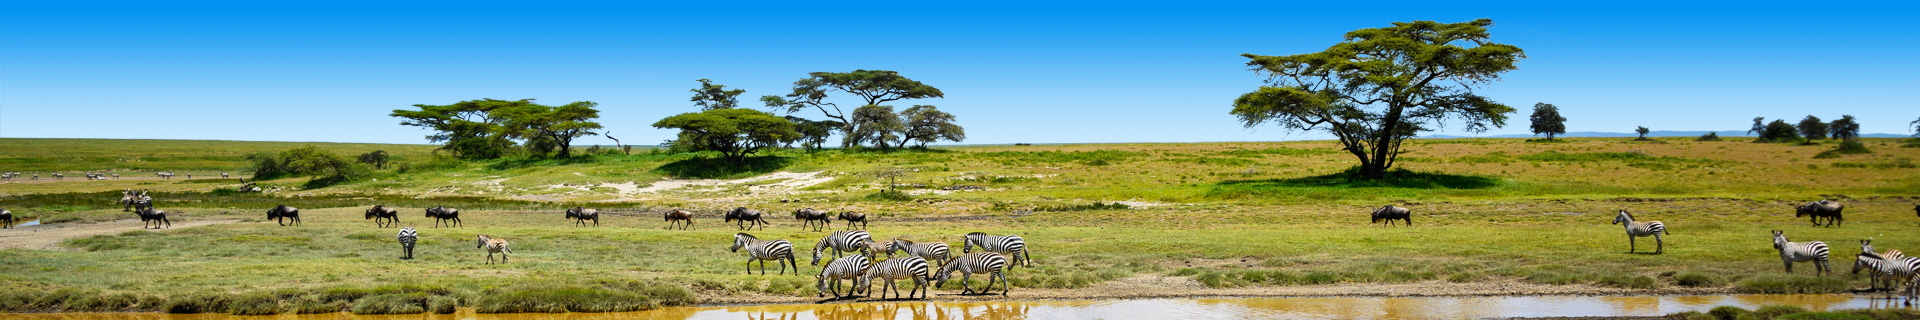 Natuur en zebras in Tanzania